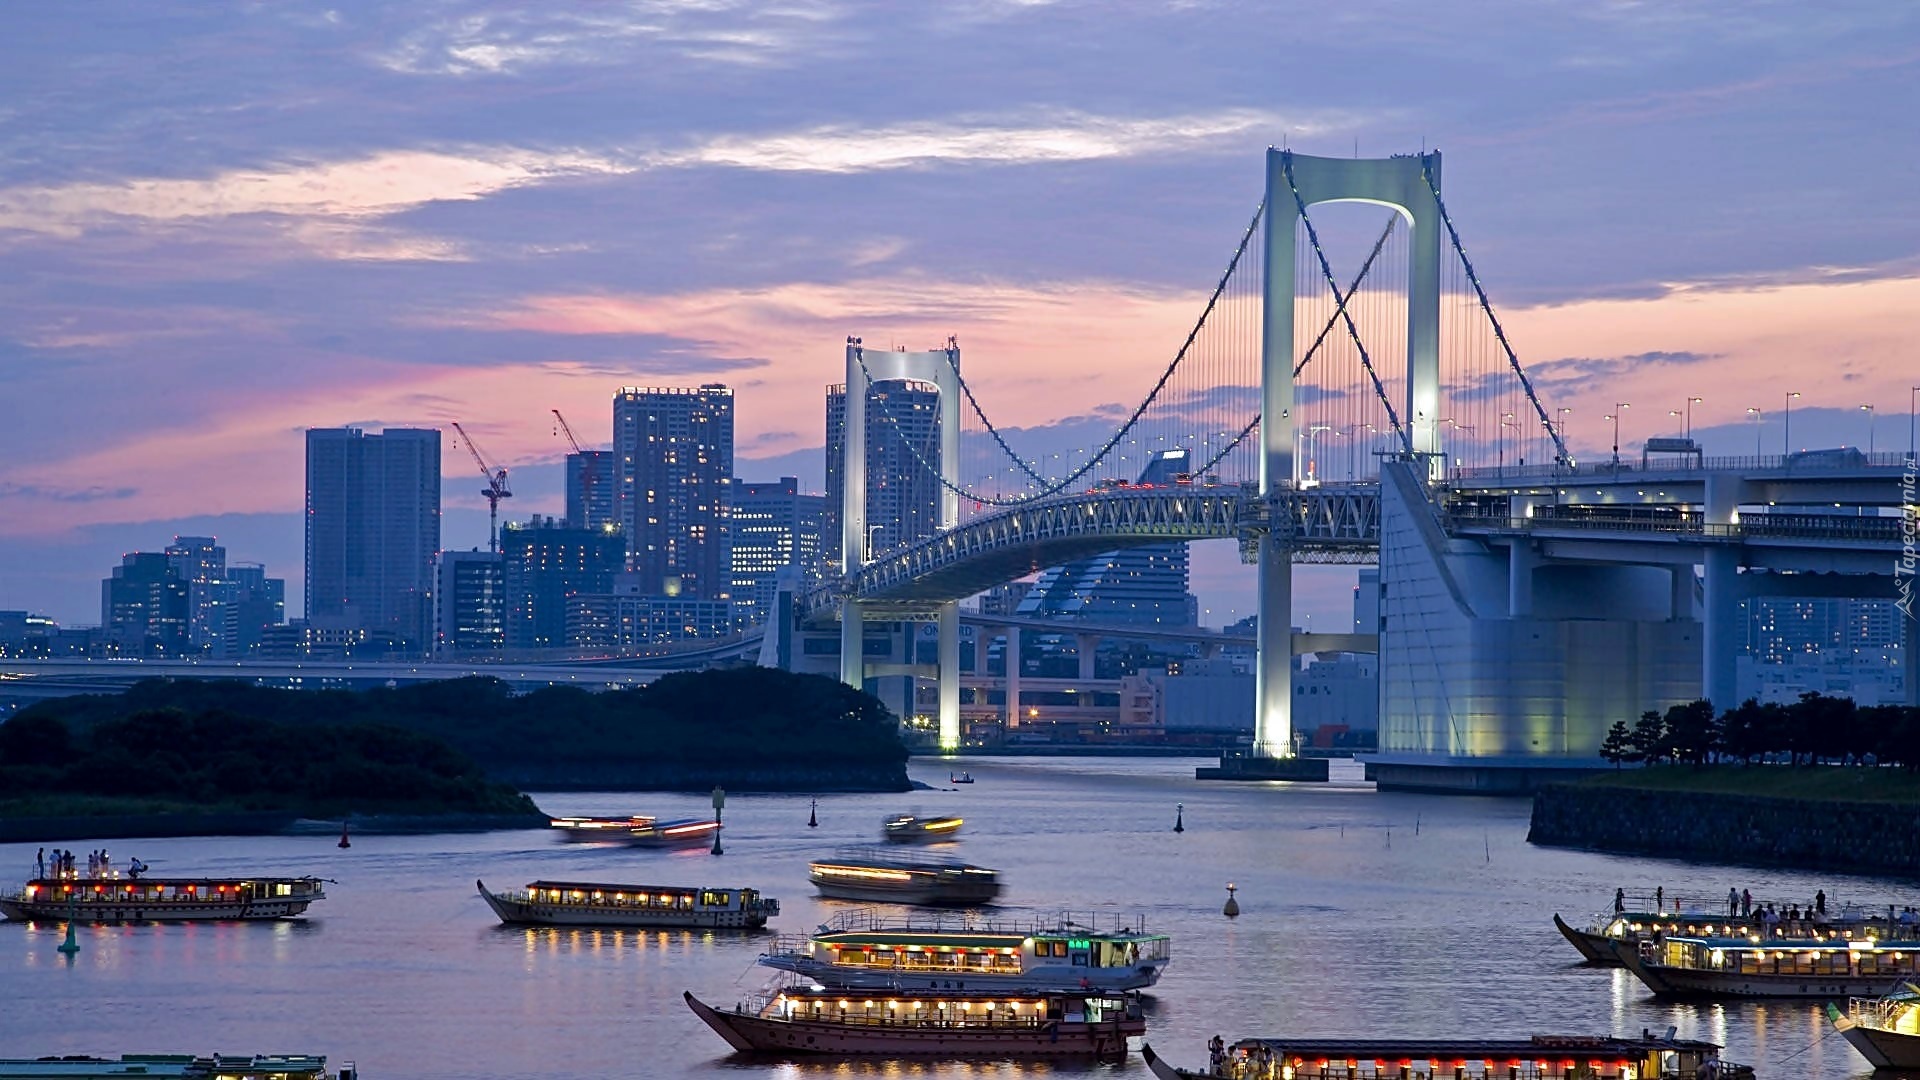 Świt, Panorama, Tokio, Most, Morze, Statki